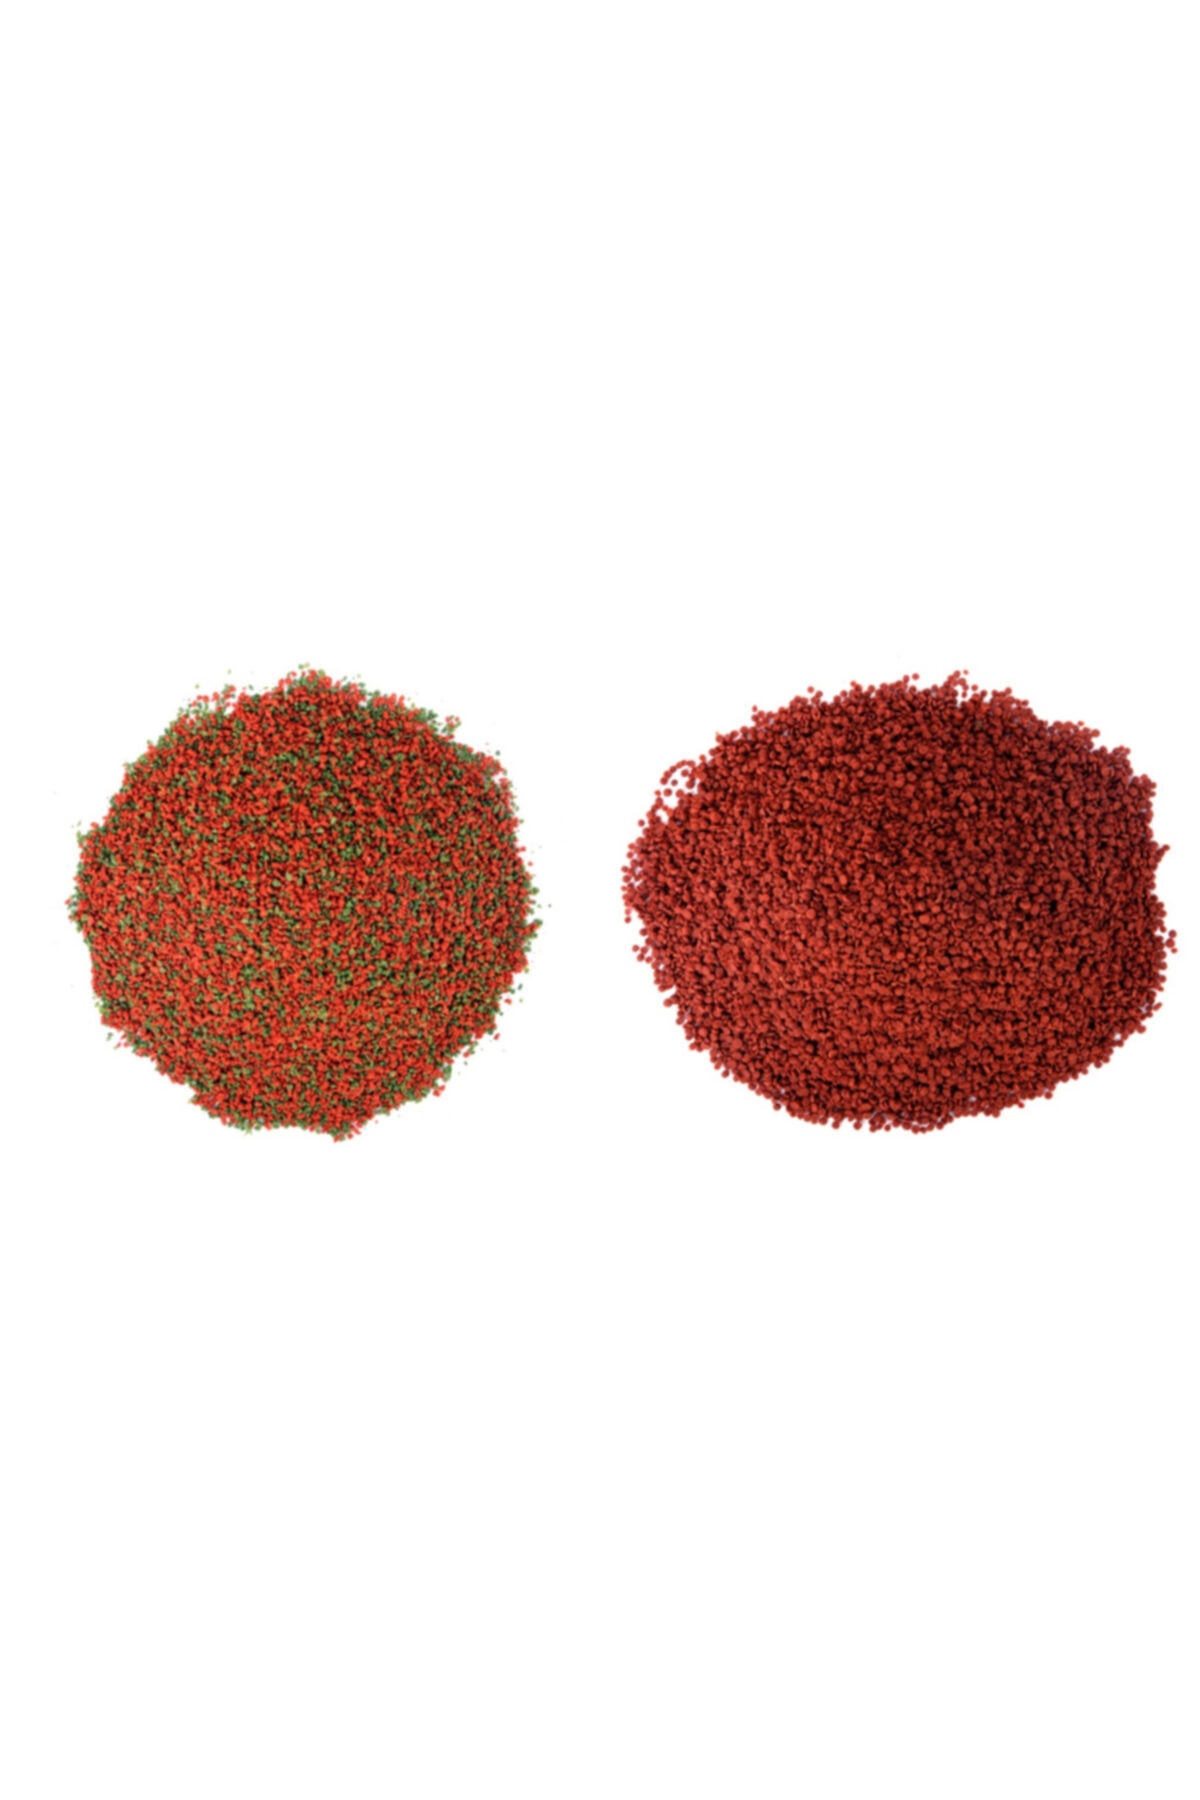 Lotus Cichlid Colour Chips Renklendirici 250 ml ve Rose Cichlid Mix 250 ml Balık Yemi